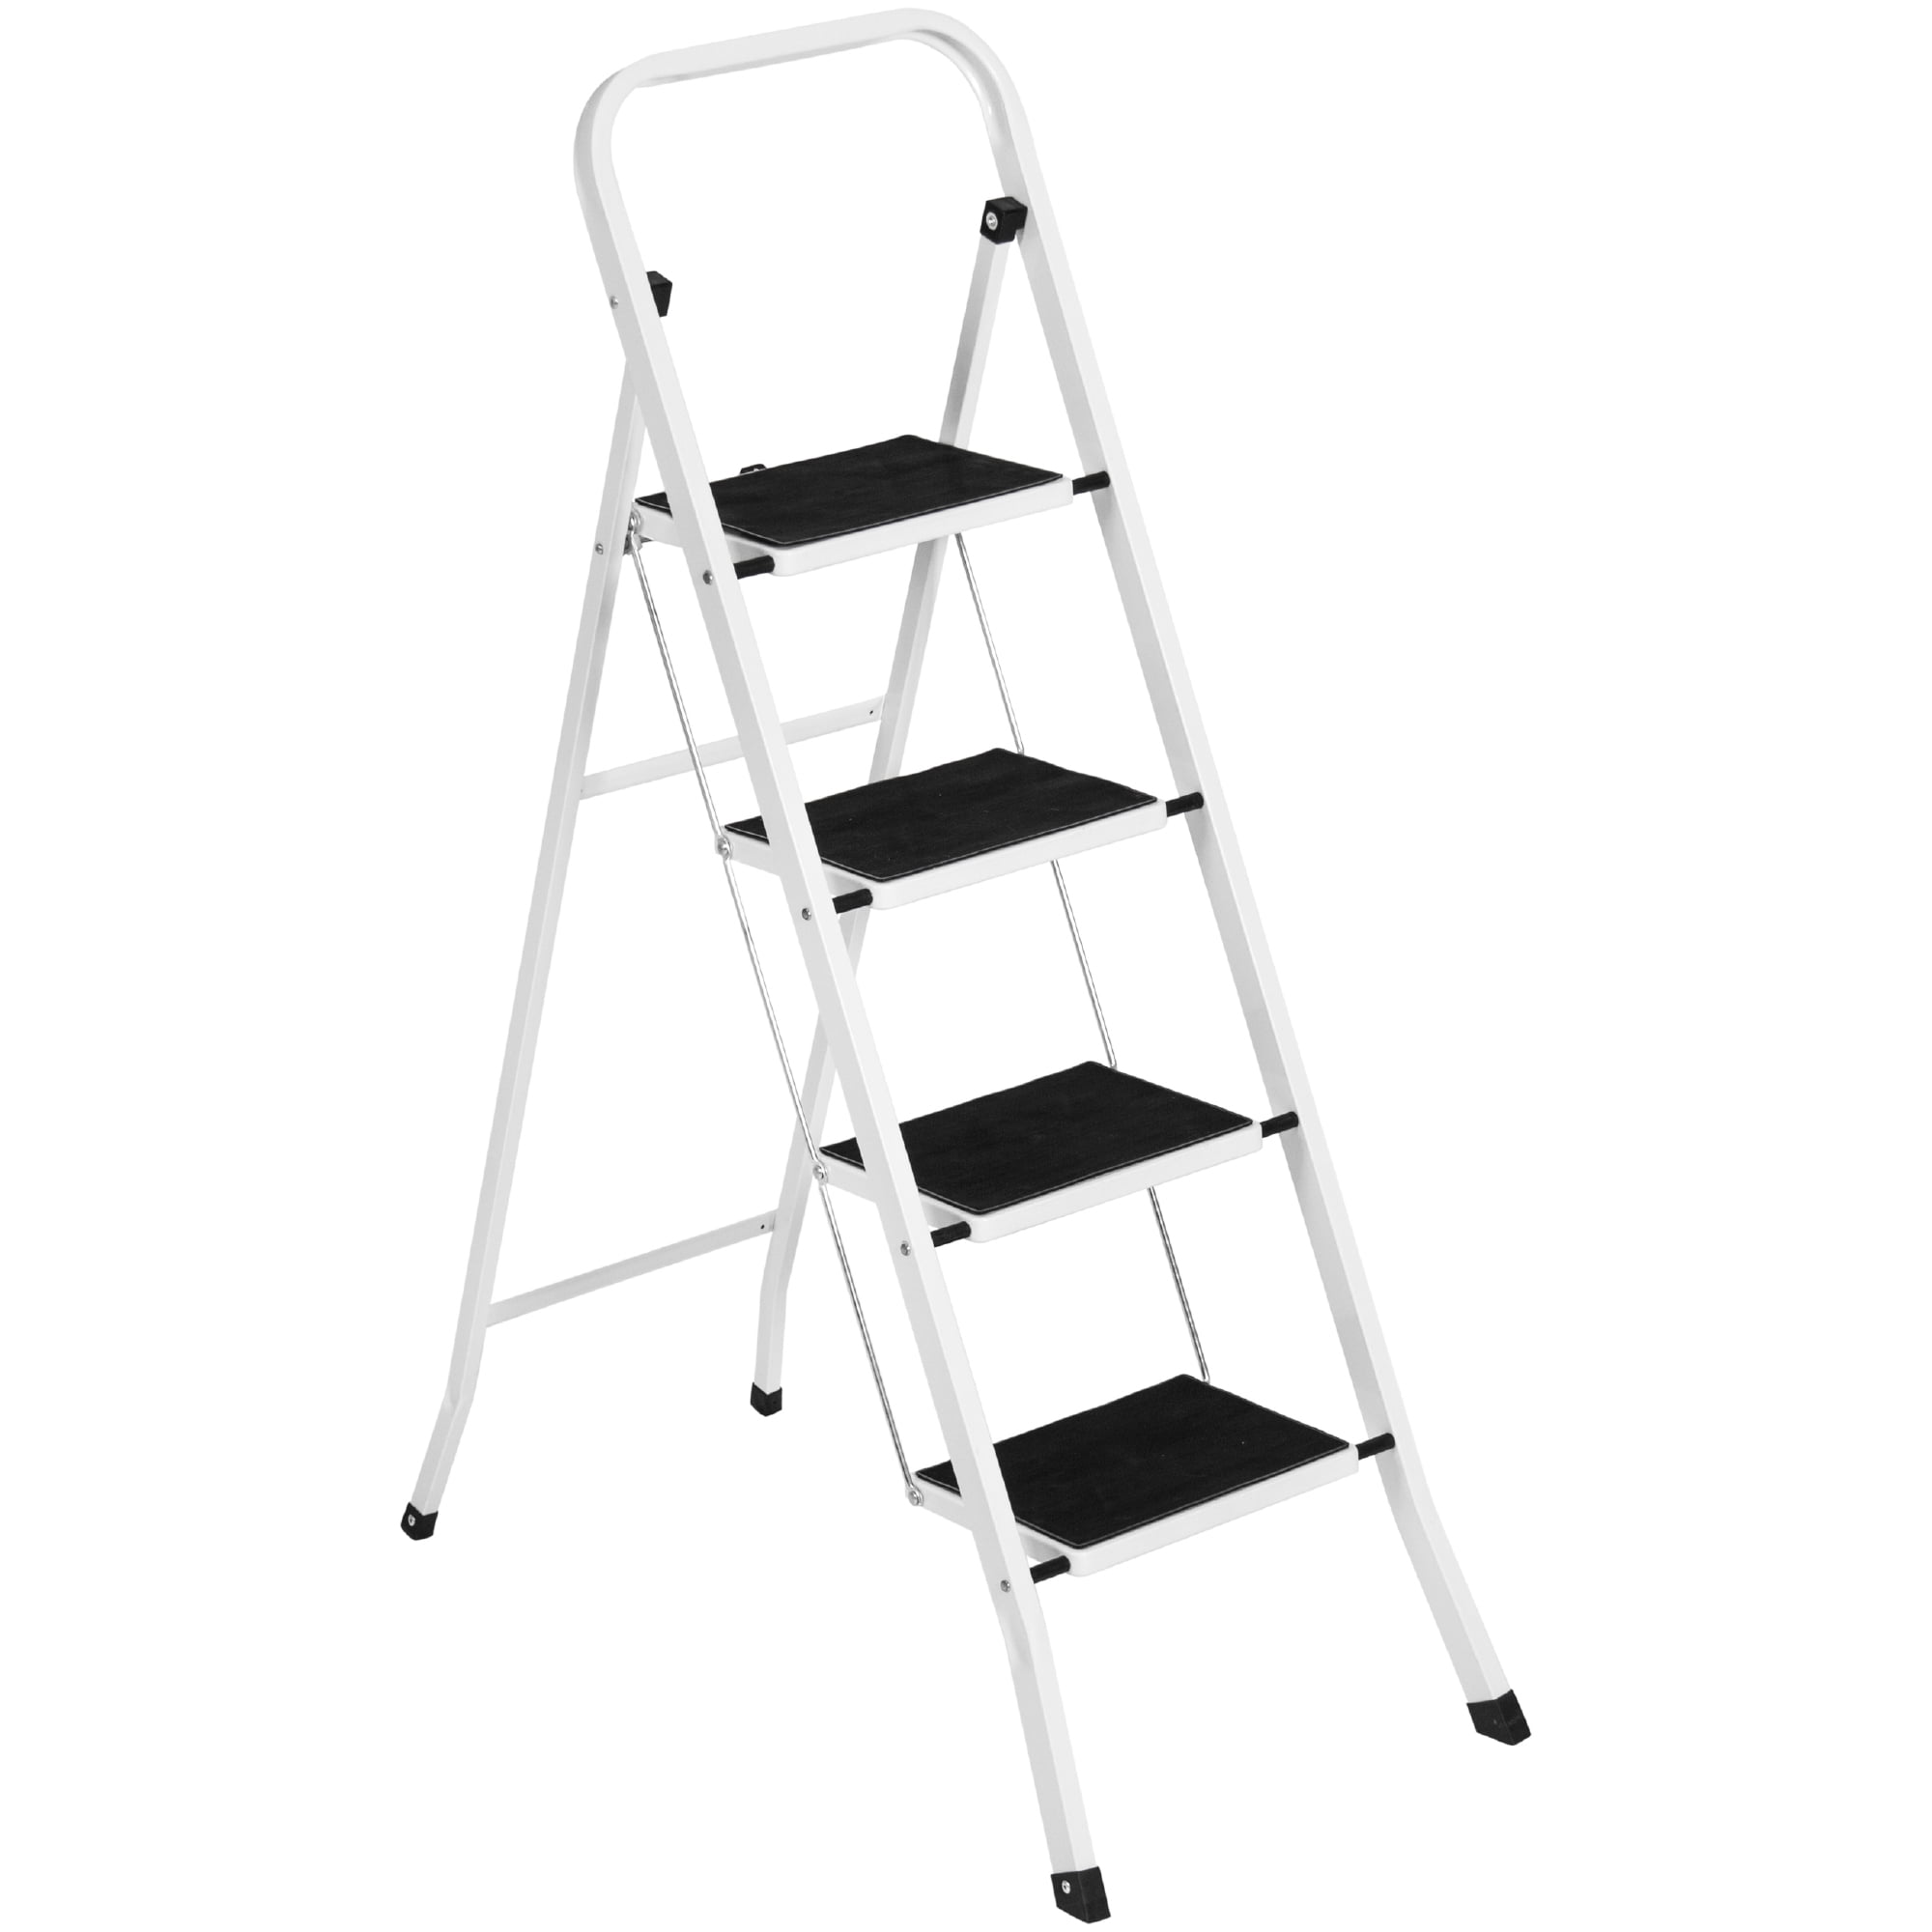 3 Step Ladder with Handle,Aluminum Anti-Slip Folding Step Stool 330Lbs Load 